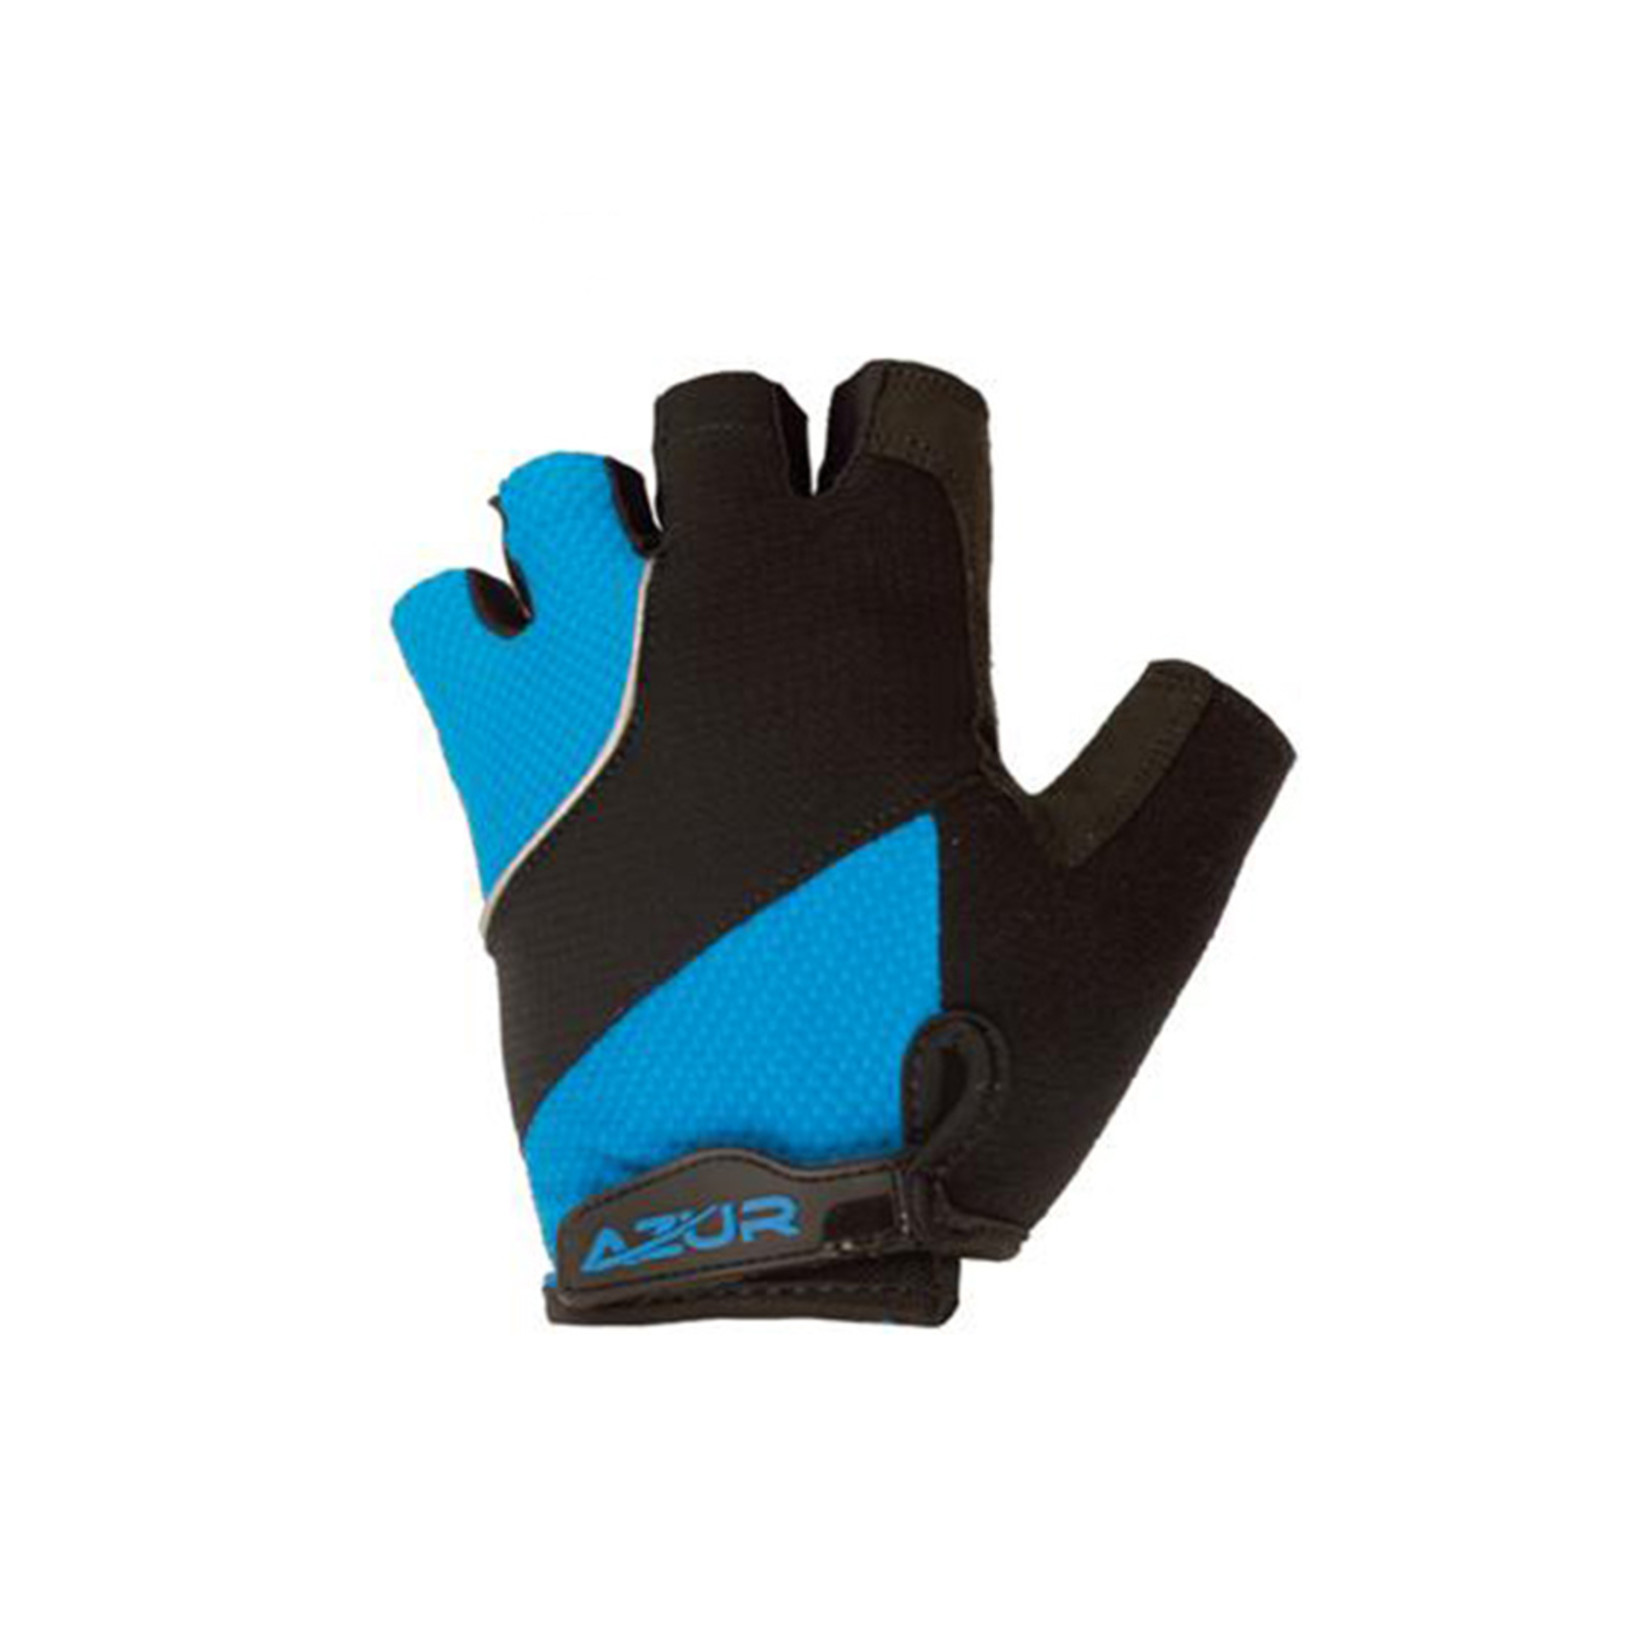 Azur Azur Bike/Cycling Glove - S6 Series - Terry Towel Thumb Wipe - Blue - X Small